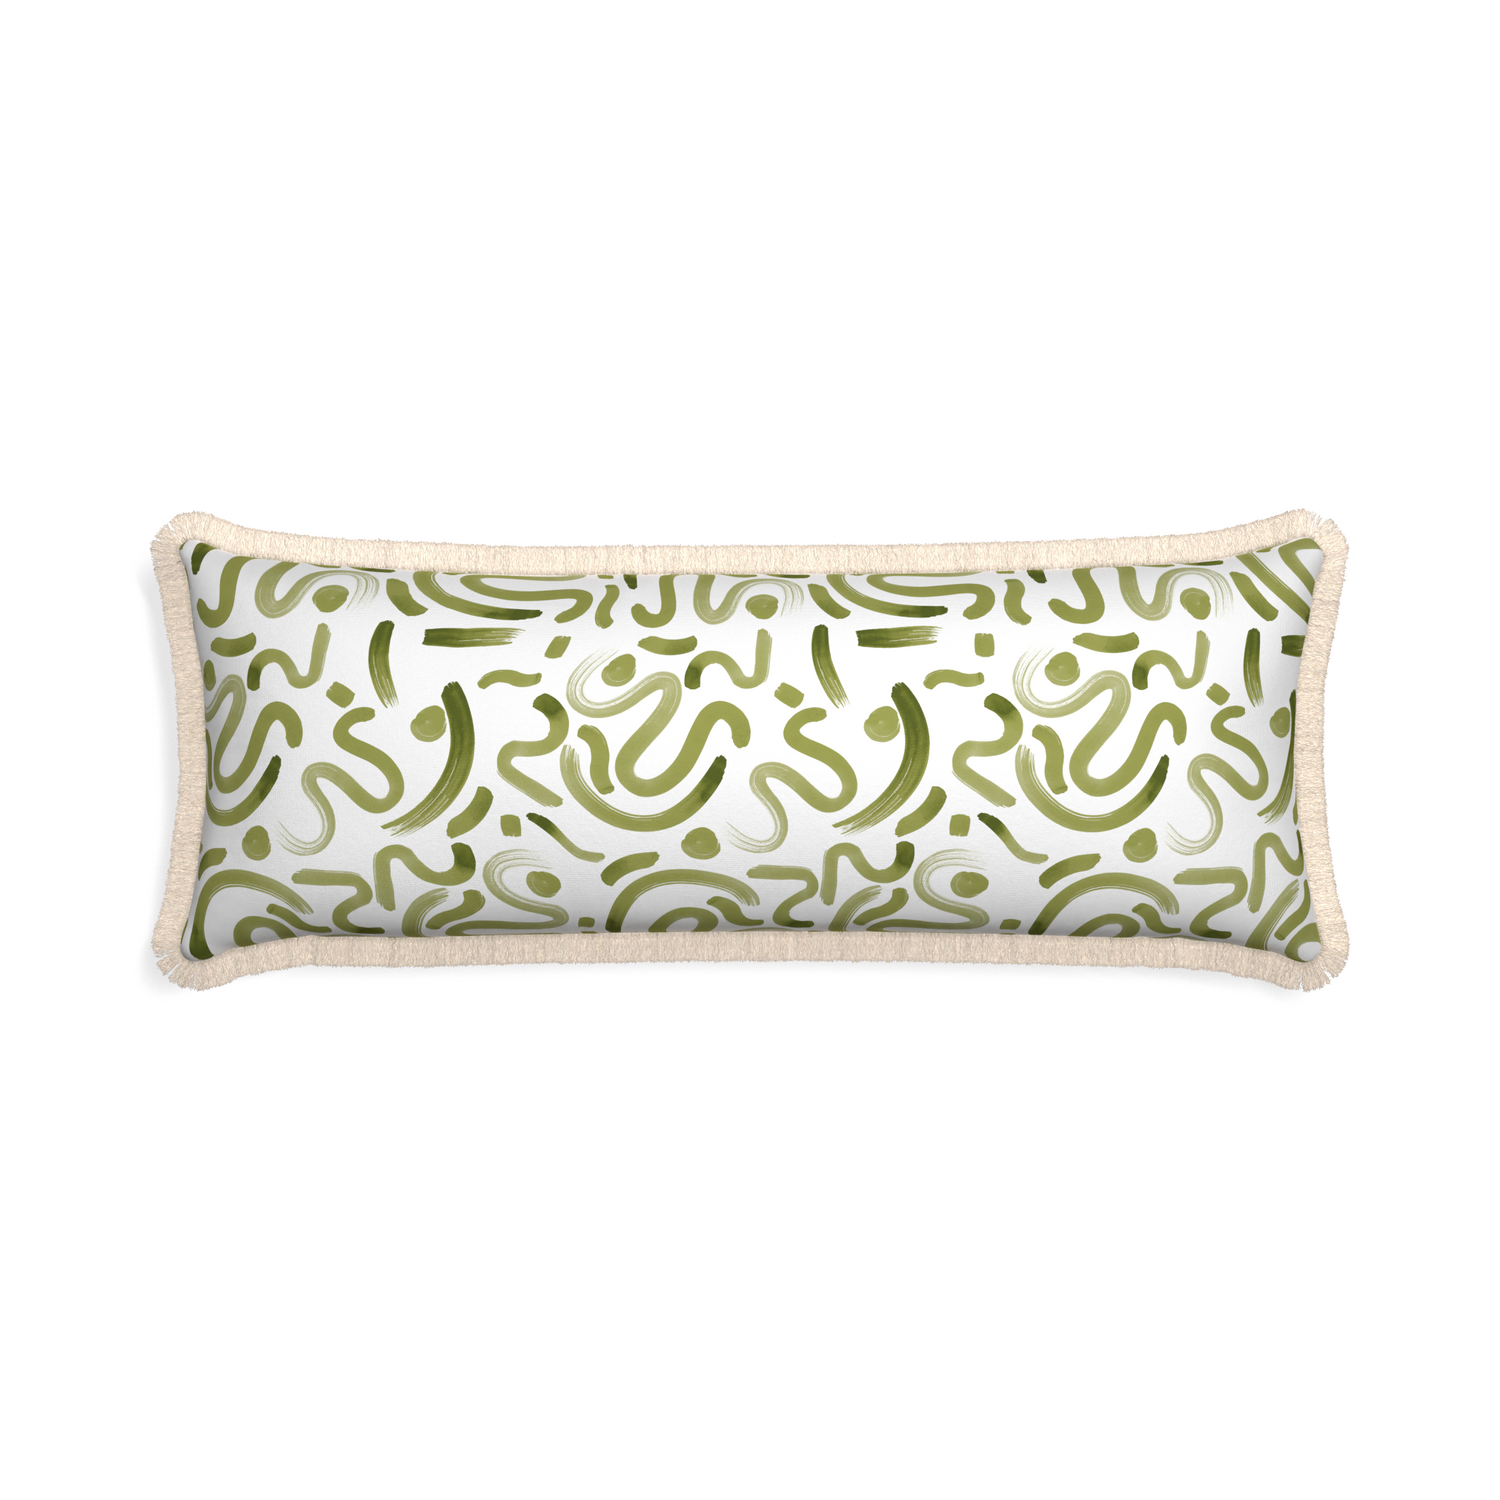 Xl-lumbar hockney moss custom pillow with cream fringe on white background